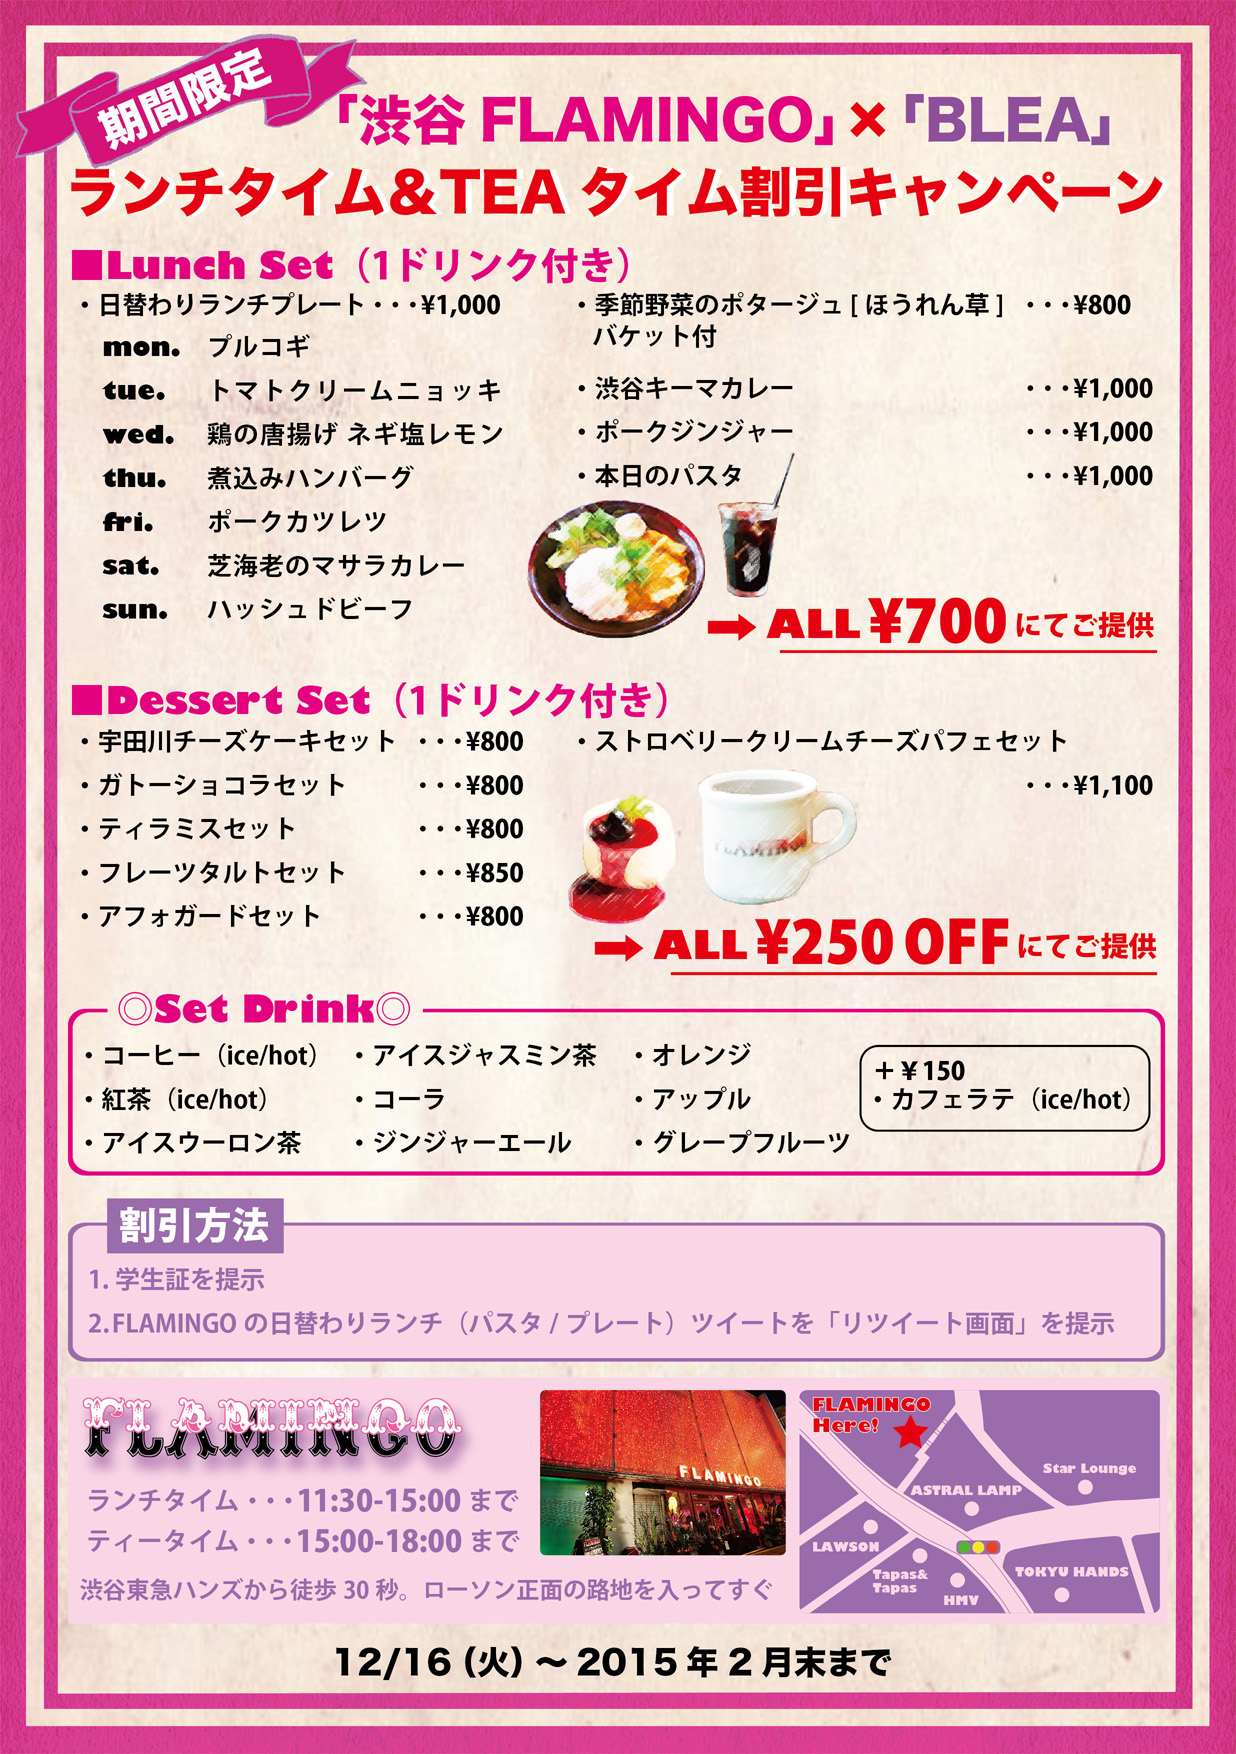 http://blea.jp/special/s_report/assets/2014/12/flamingo_BLEA%EF%BC%BFCP%20%281%29.jpg